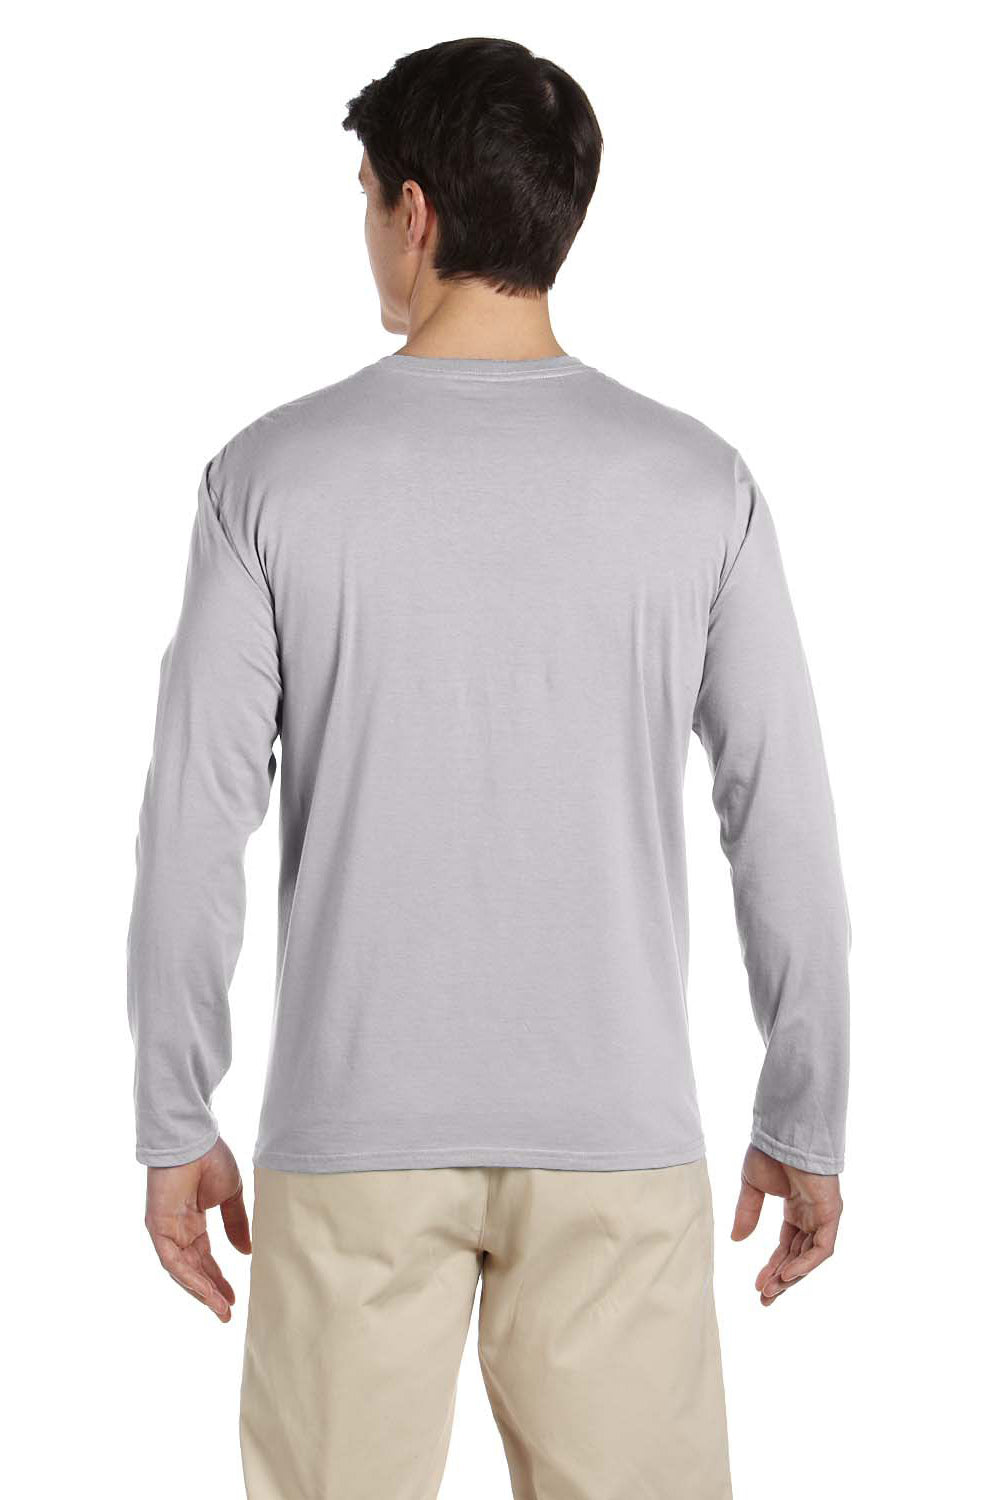 Gildan G644 Mens Softstyle Long Sleeve Crewneck T-Shirt Sport Grey Back